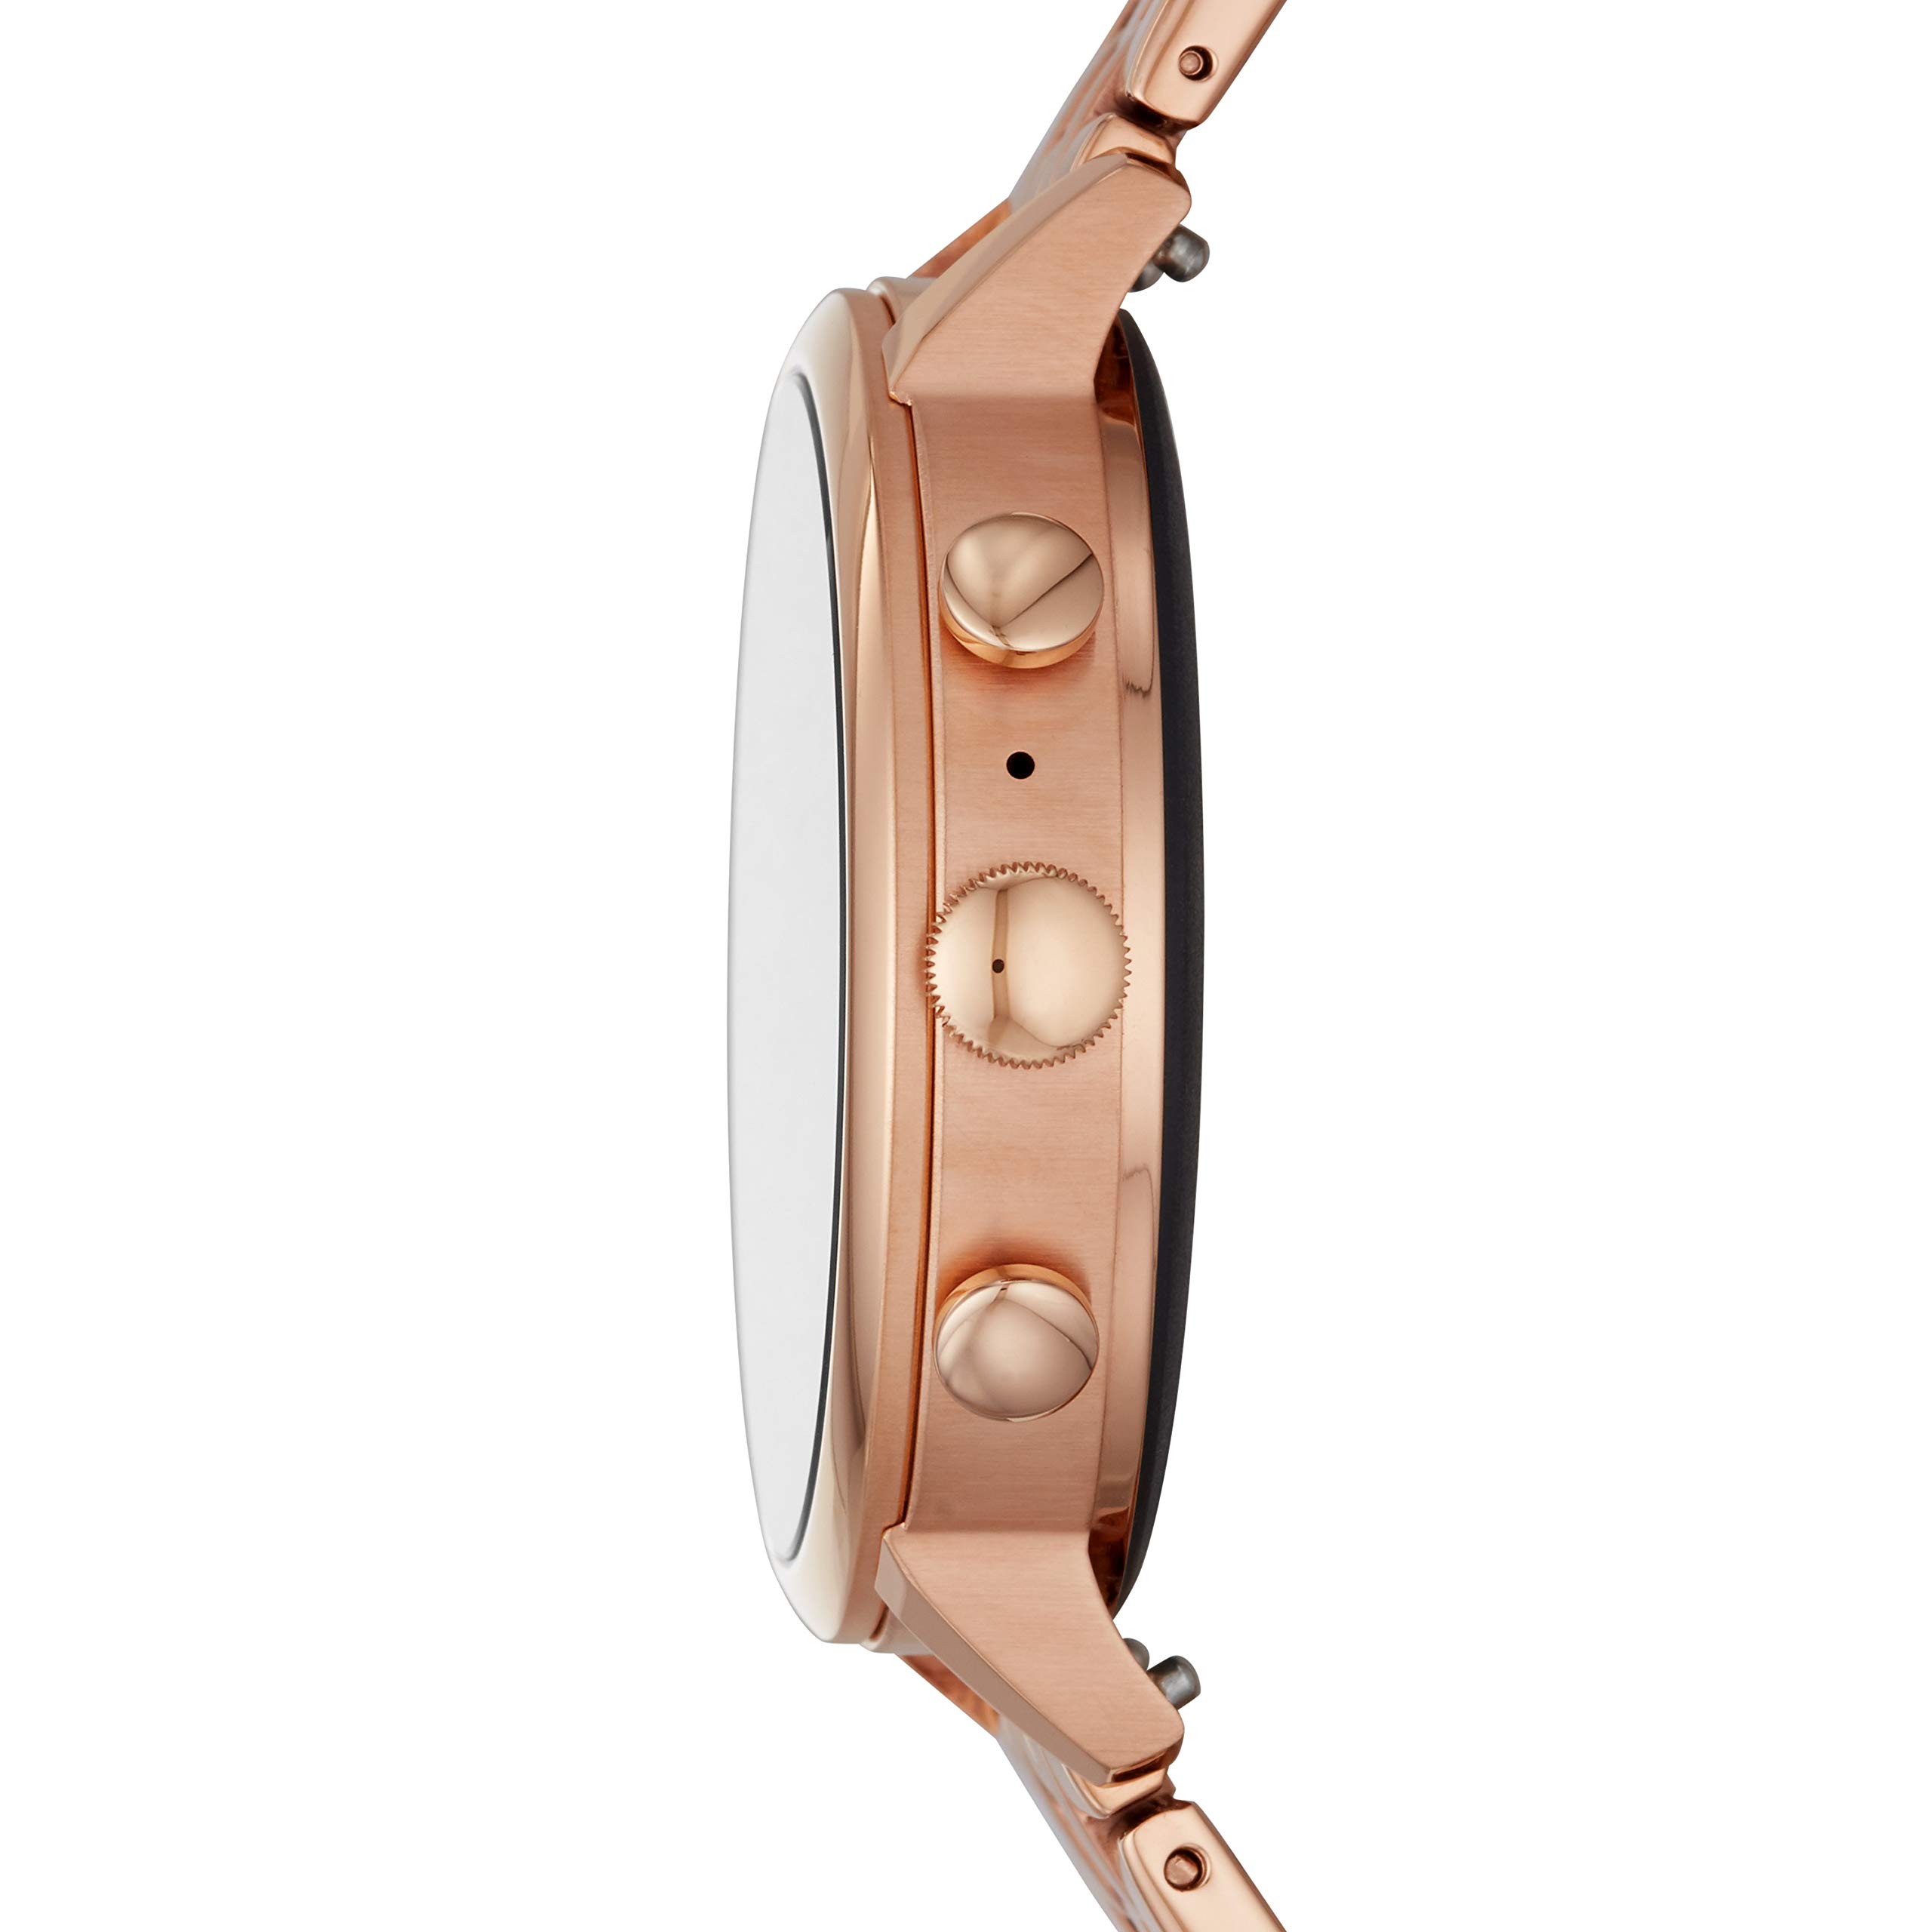 Fossil Women's Gen 4 Venture HR Heart Rate Stainless Steel Touchscreen Smartwatch, Color: Rose Gold 5-Link (Model: BQD3001)